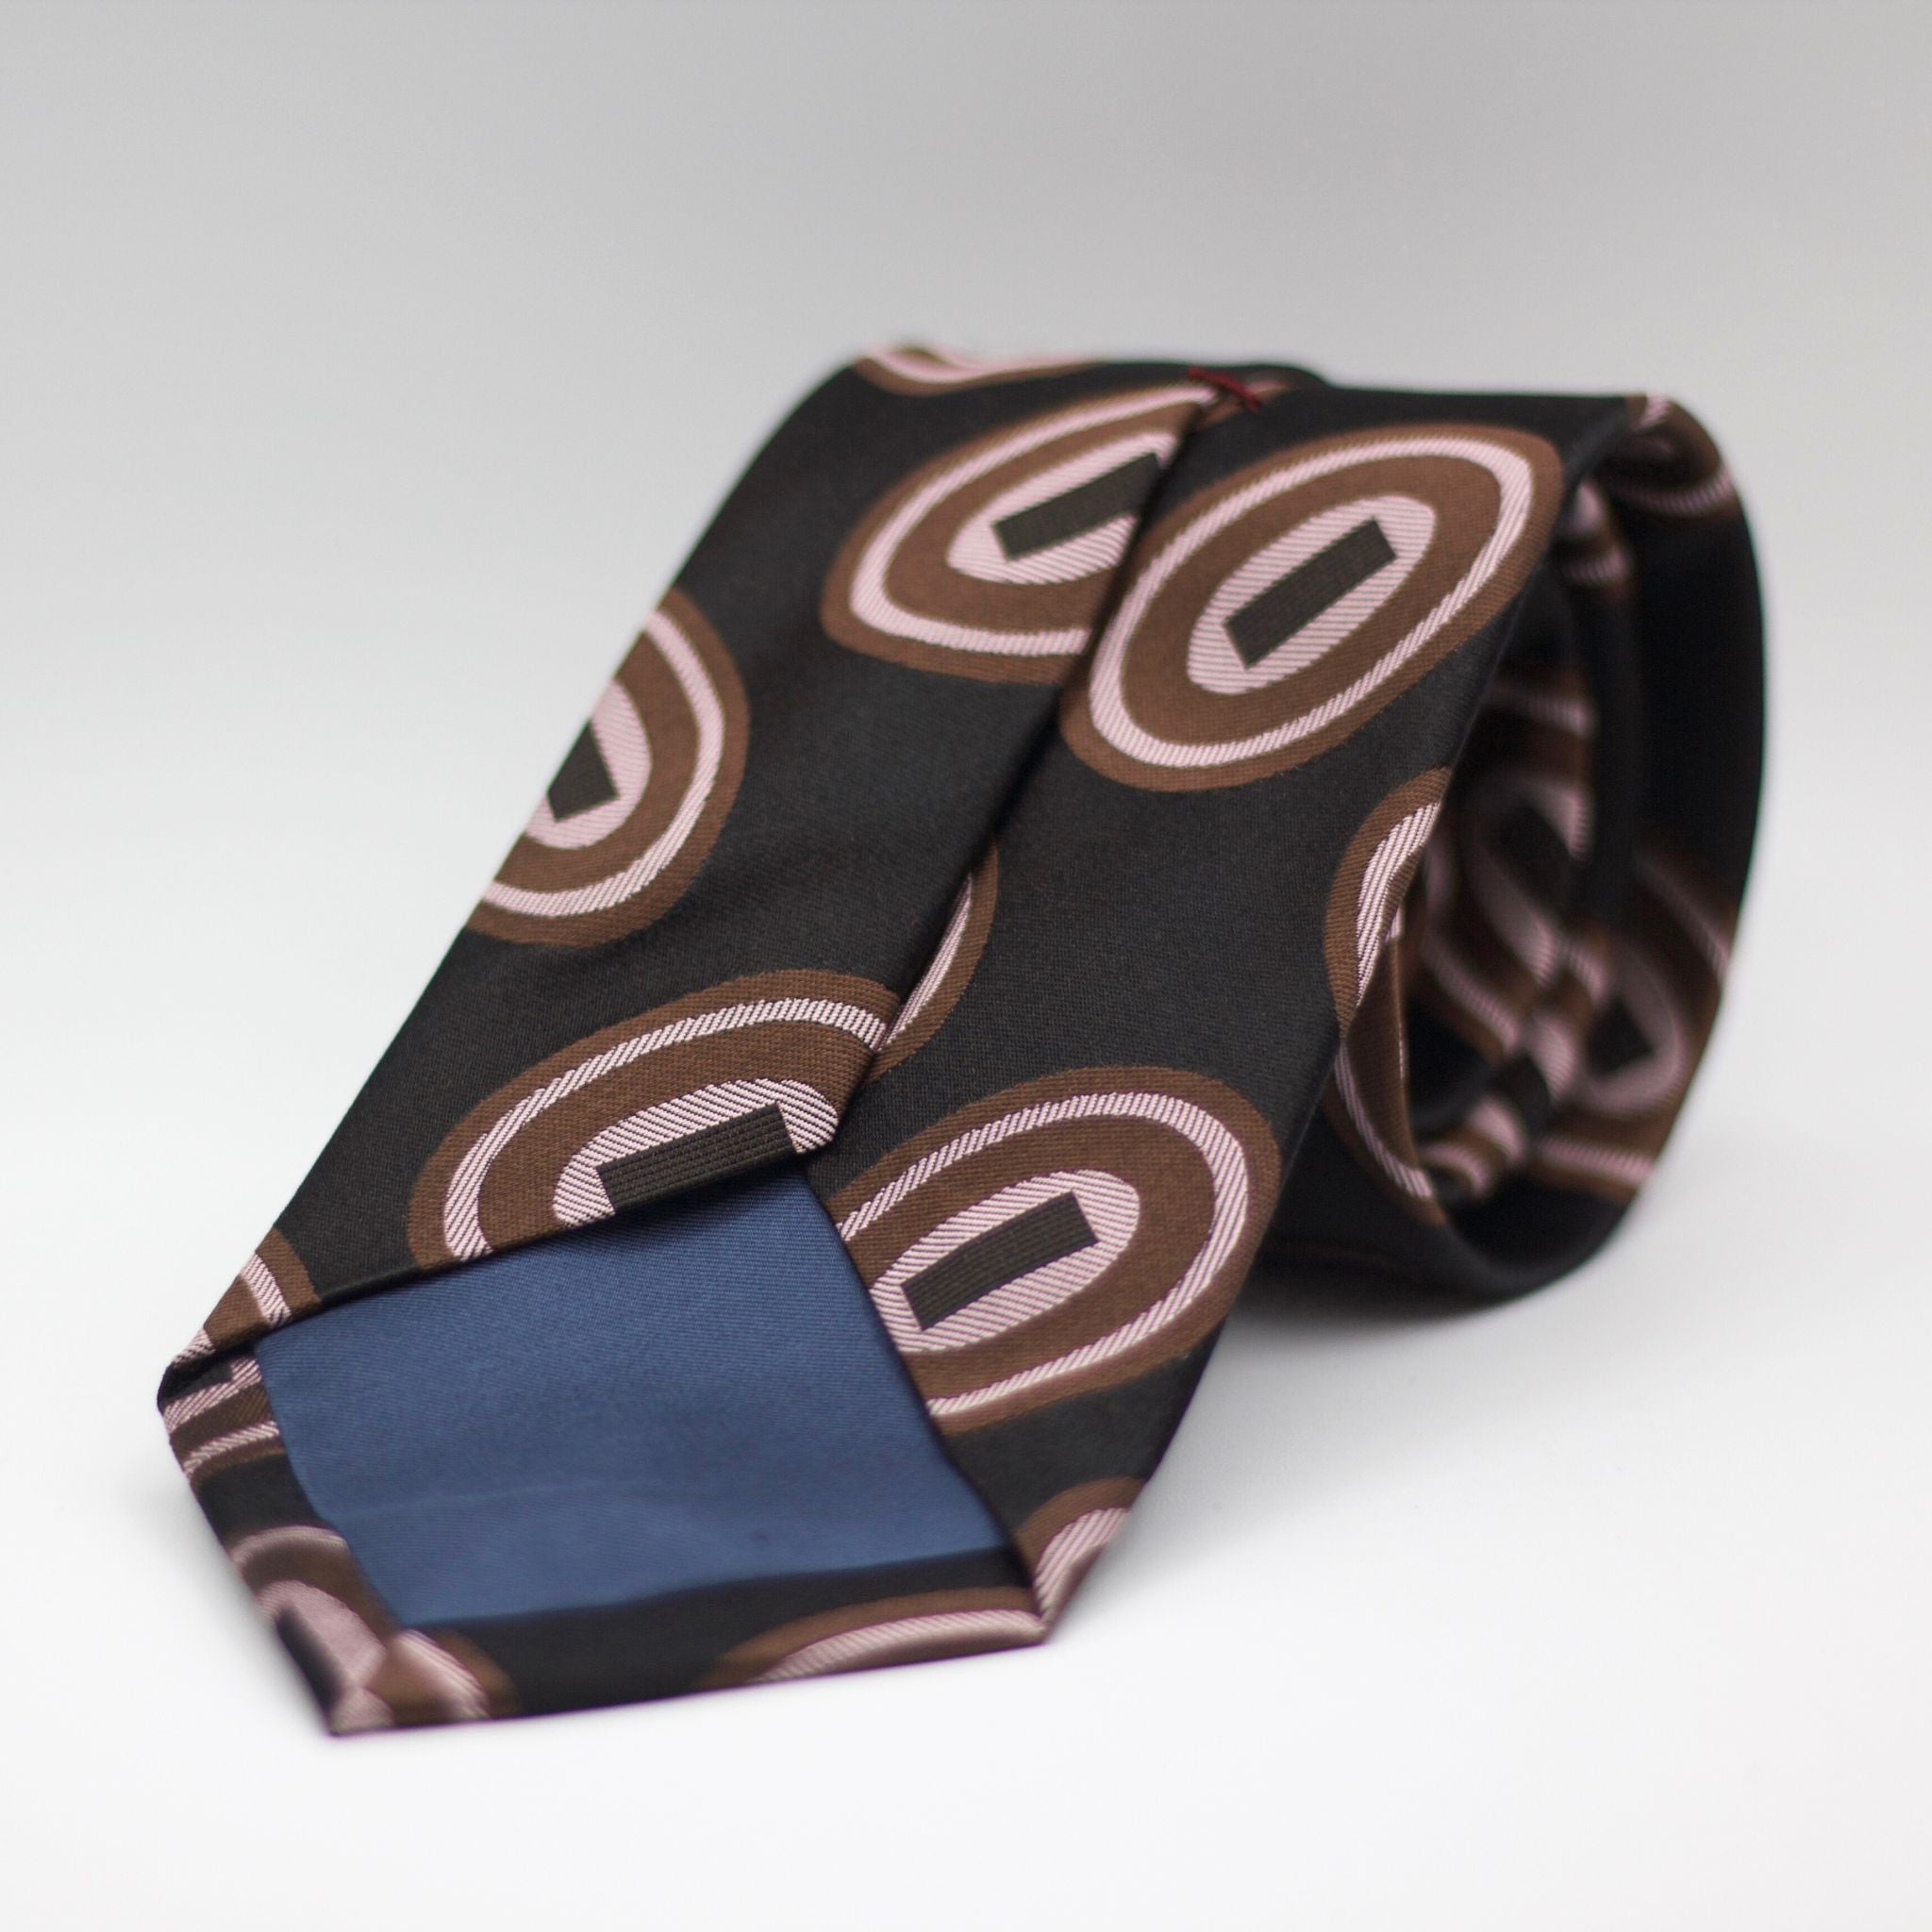 Cruciani & Bella 100% Silk Jacquard  Tipped Dark Brown, Pink and Brown motif tie Handmade in Italy 8 cm x 150 cm